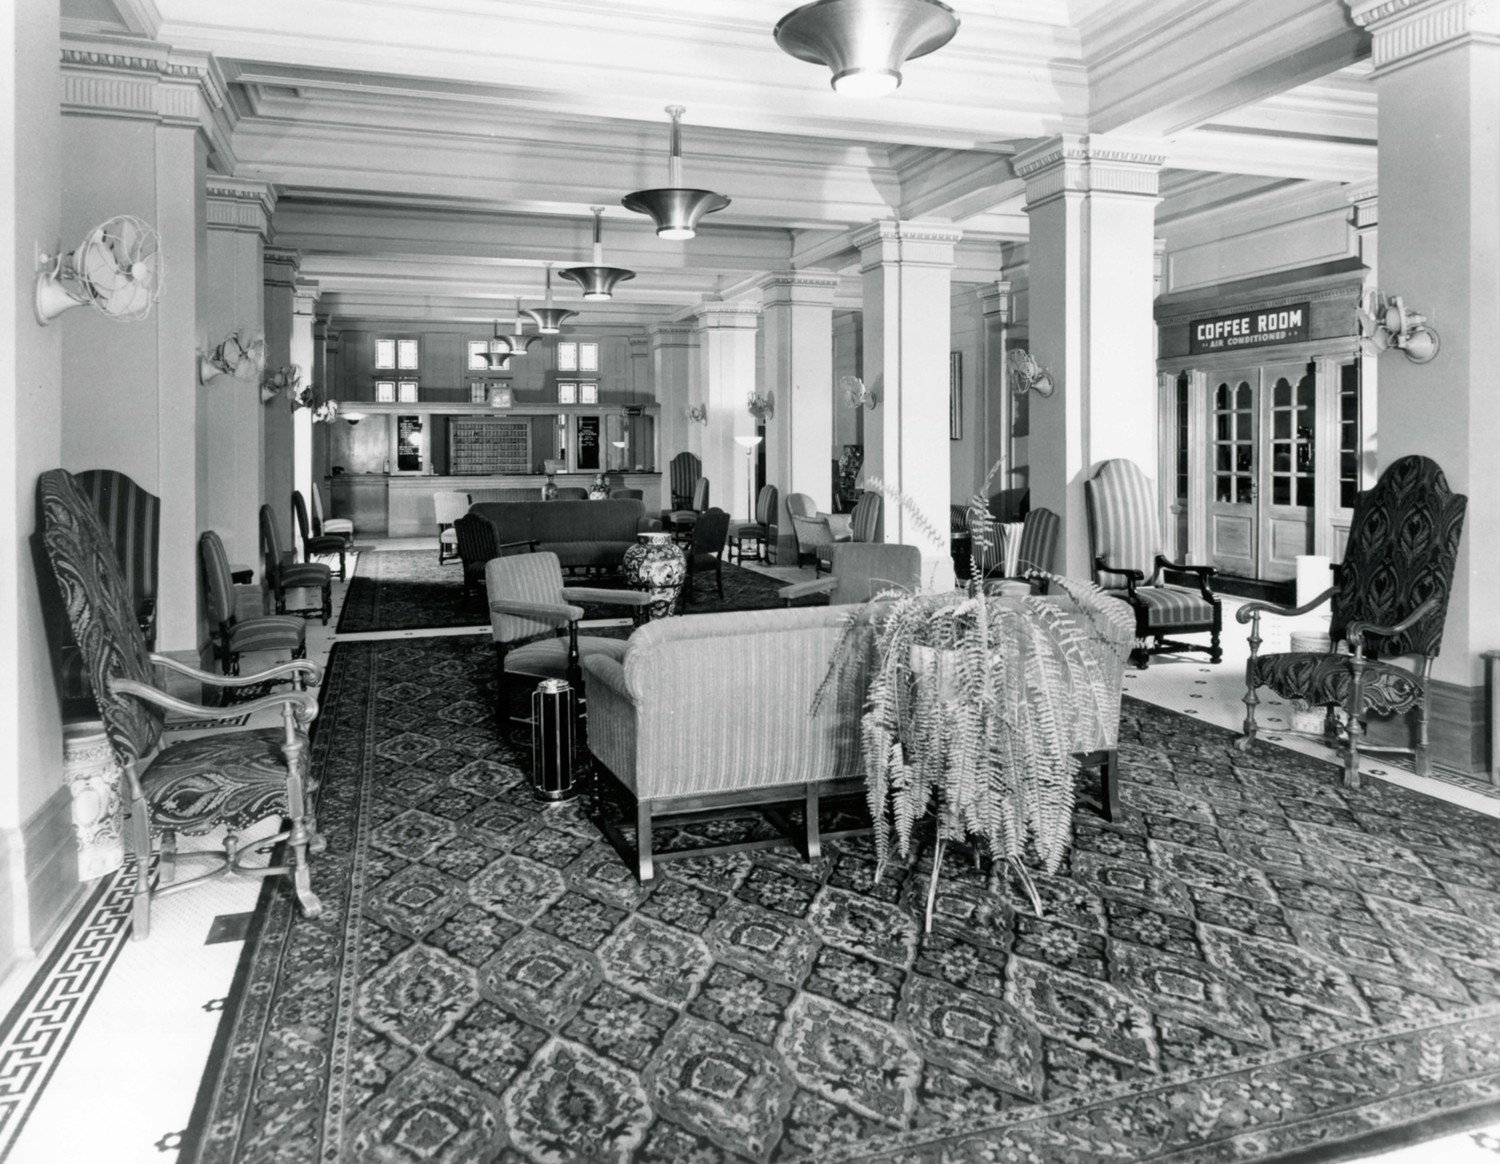 Robert E. Lee Hotel, San Antonio Texas Historic interior view of lobby (1938)